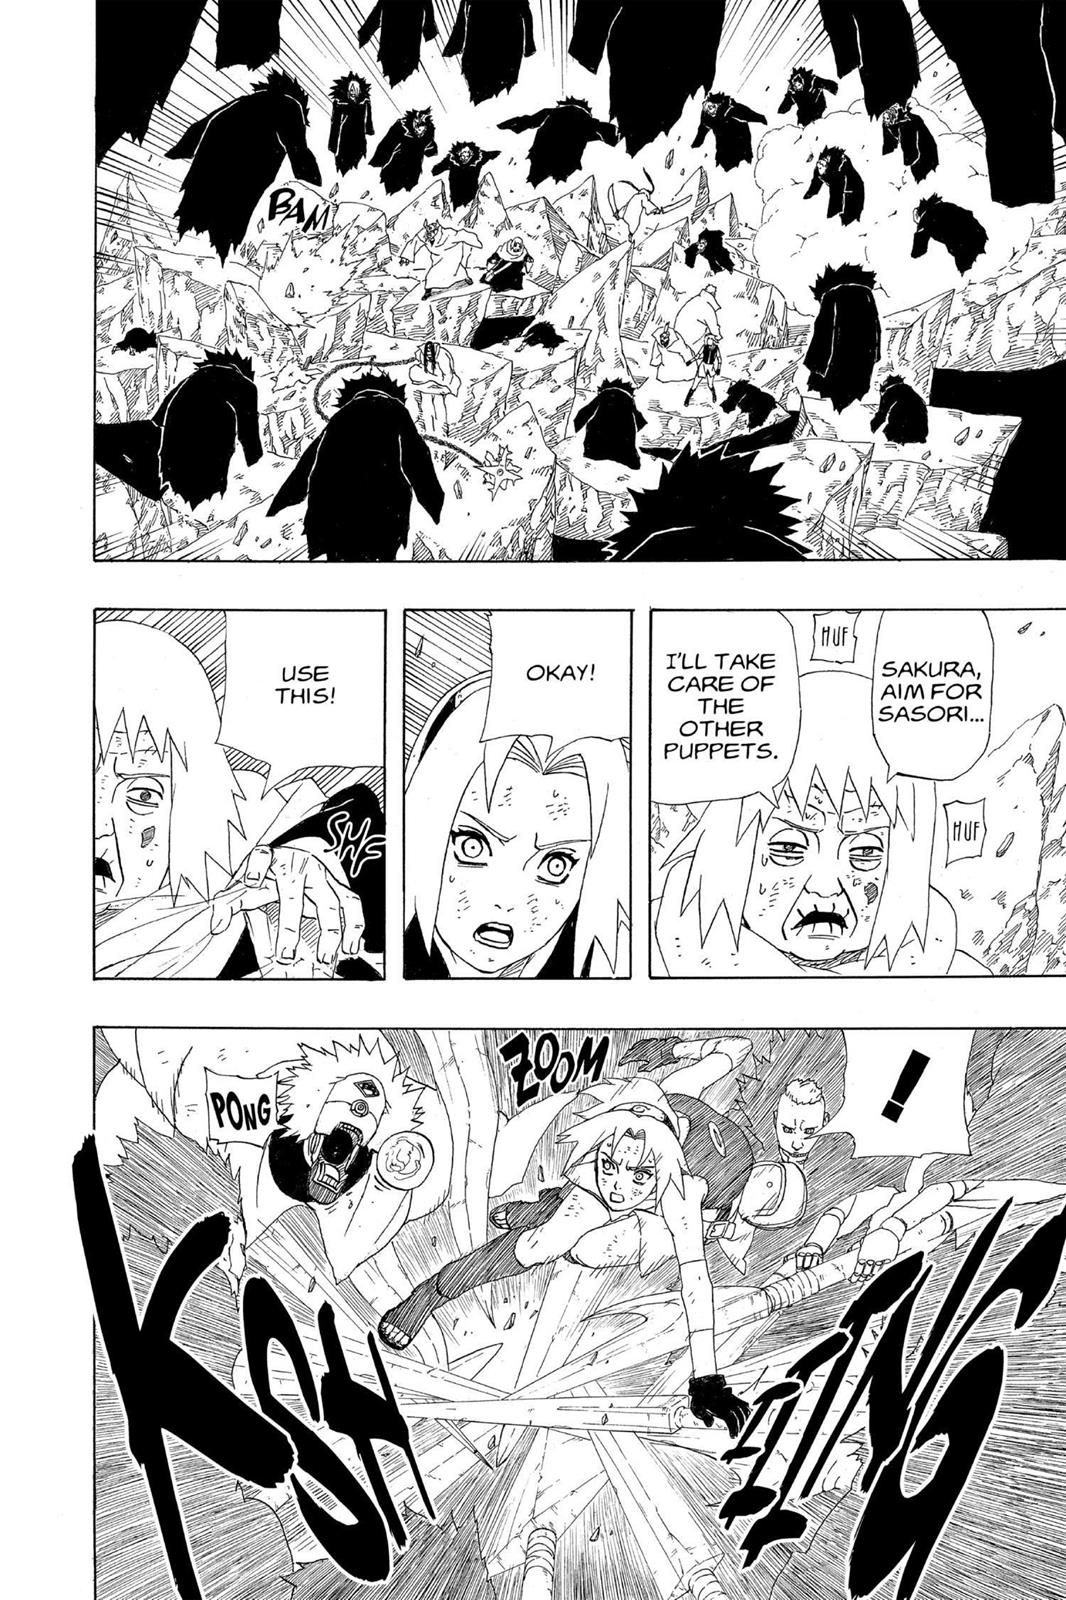 Sakura (Boruto) vs Naruto (Boruto/Sem Kurama)  - Página 6 0273-010